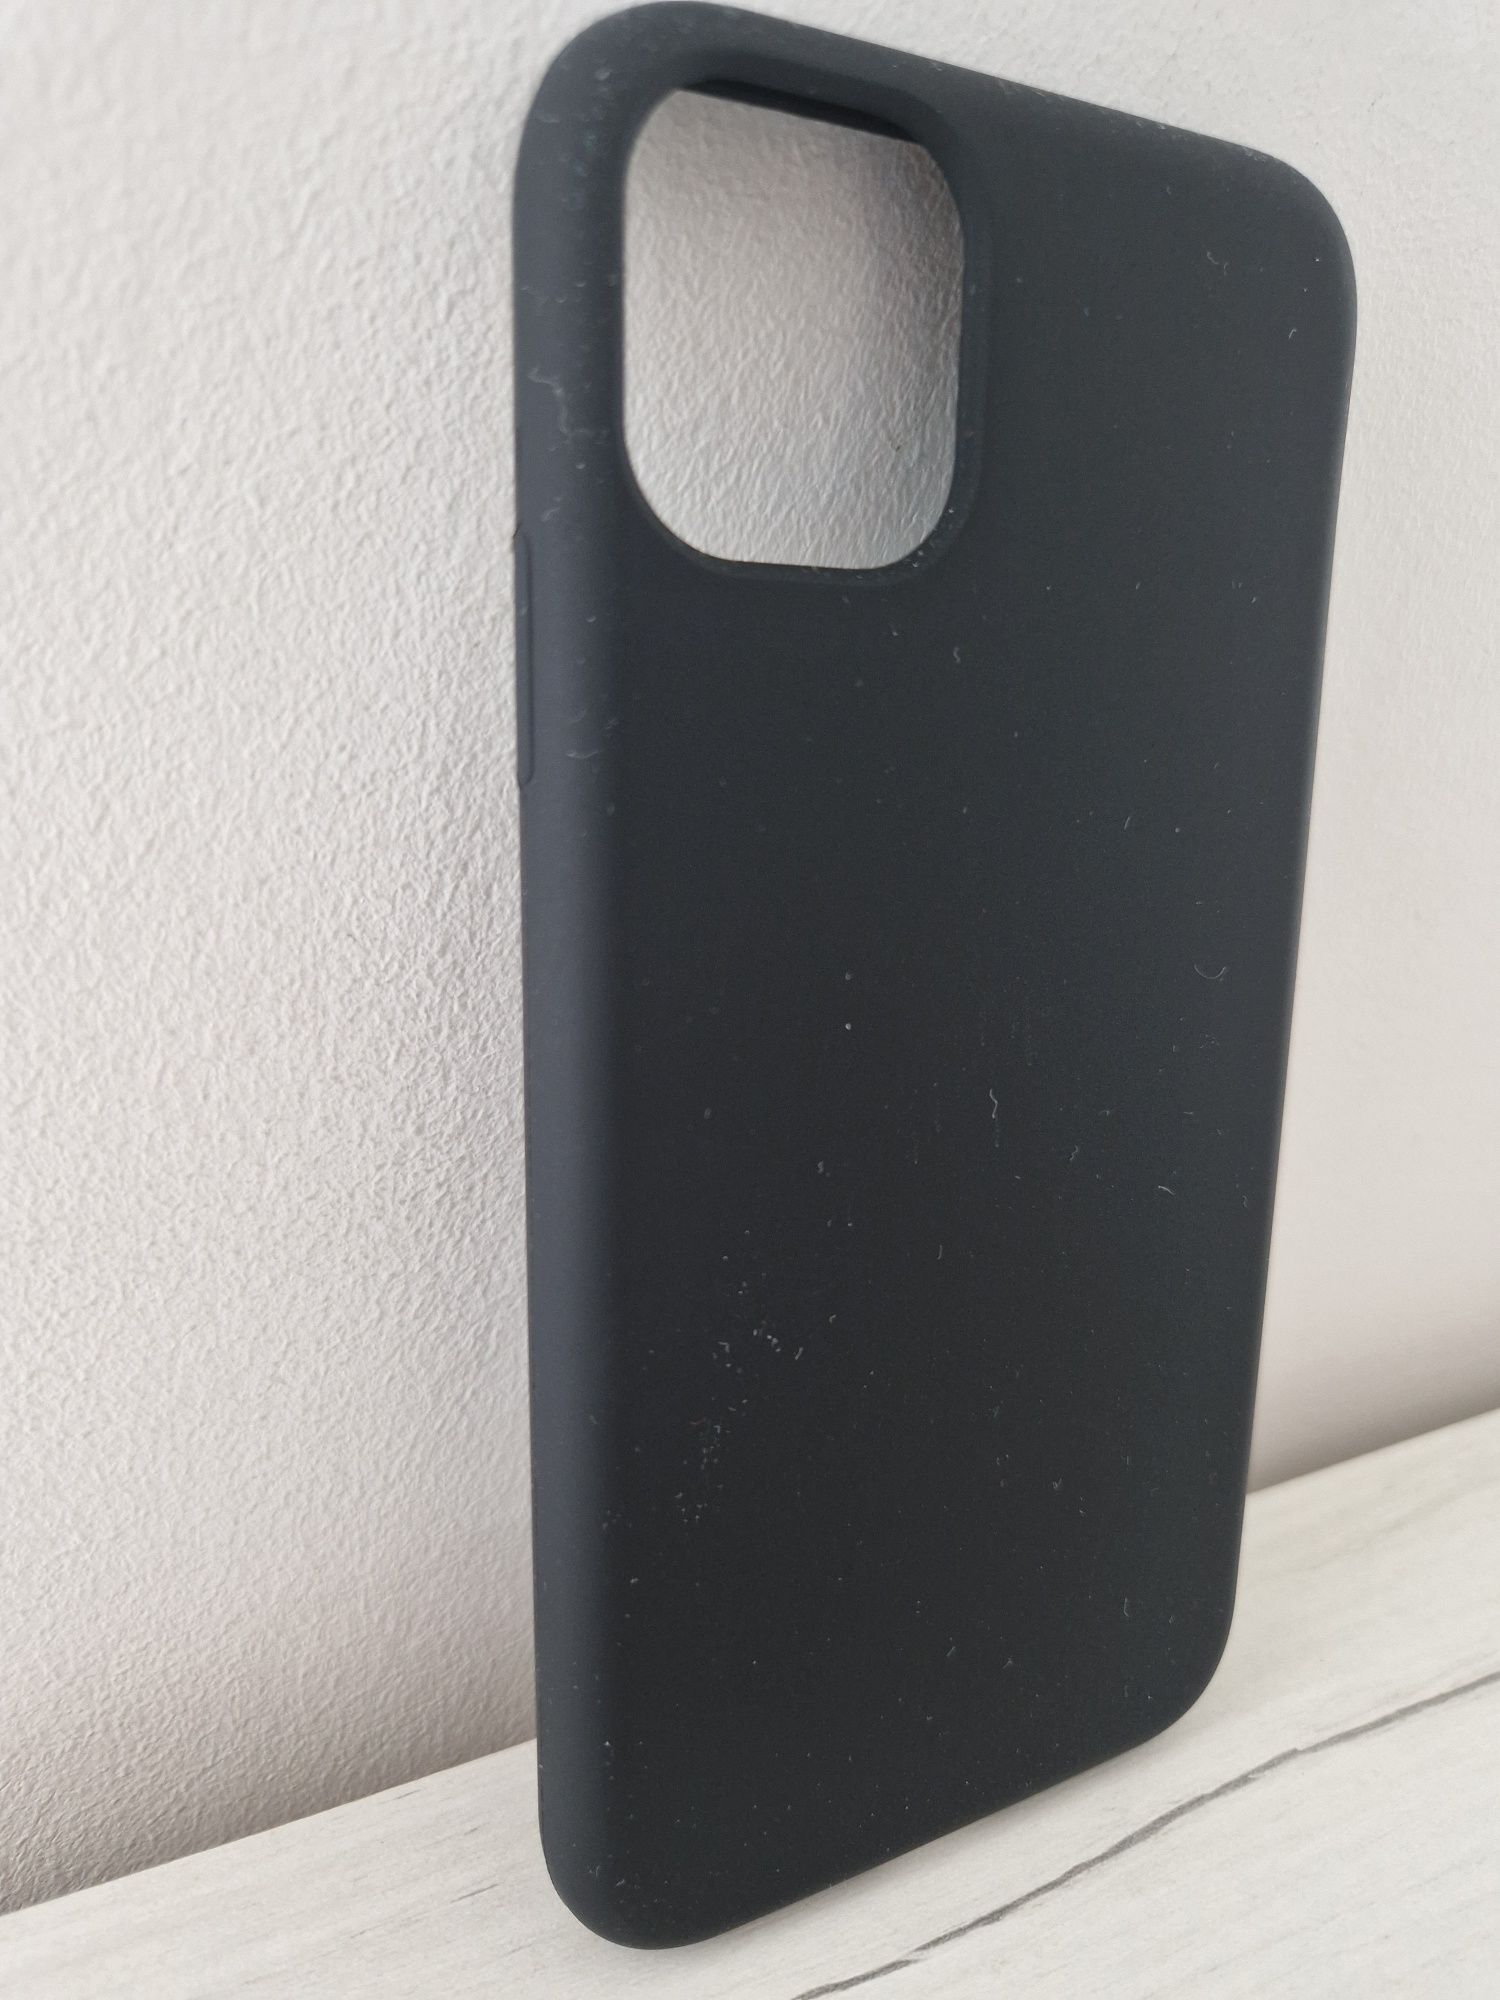 Silicone Lite Case do Iphone 11 czarny